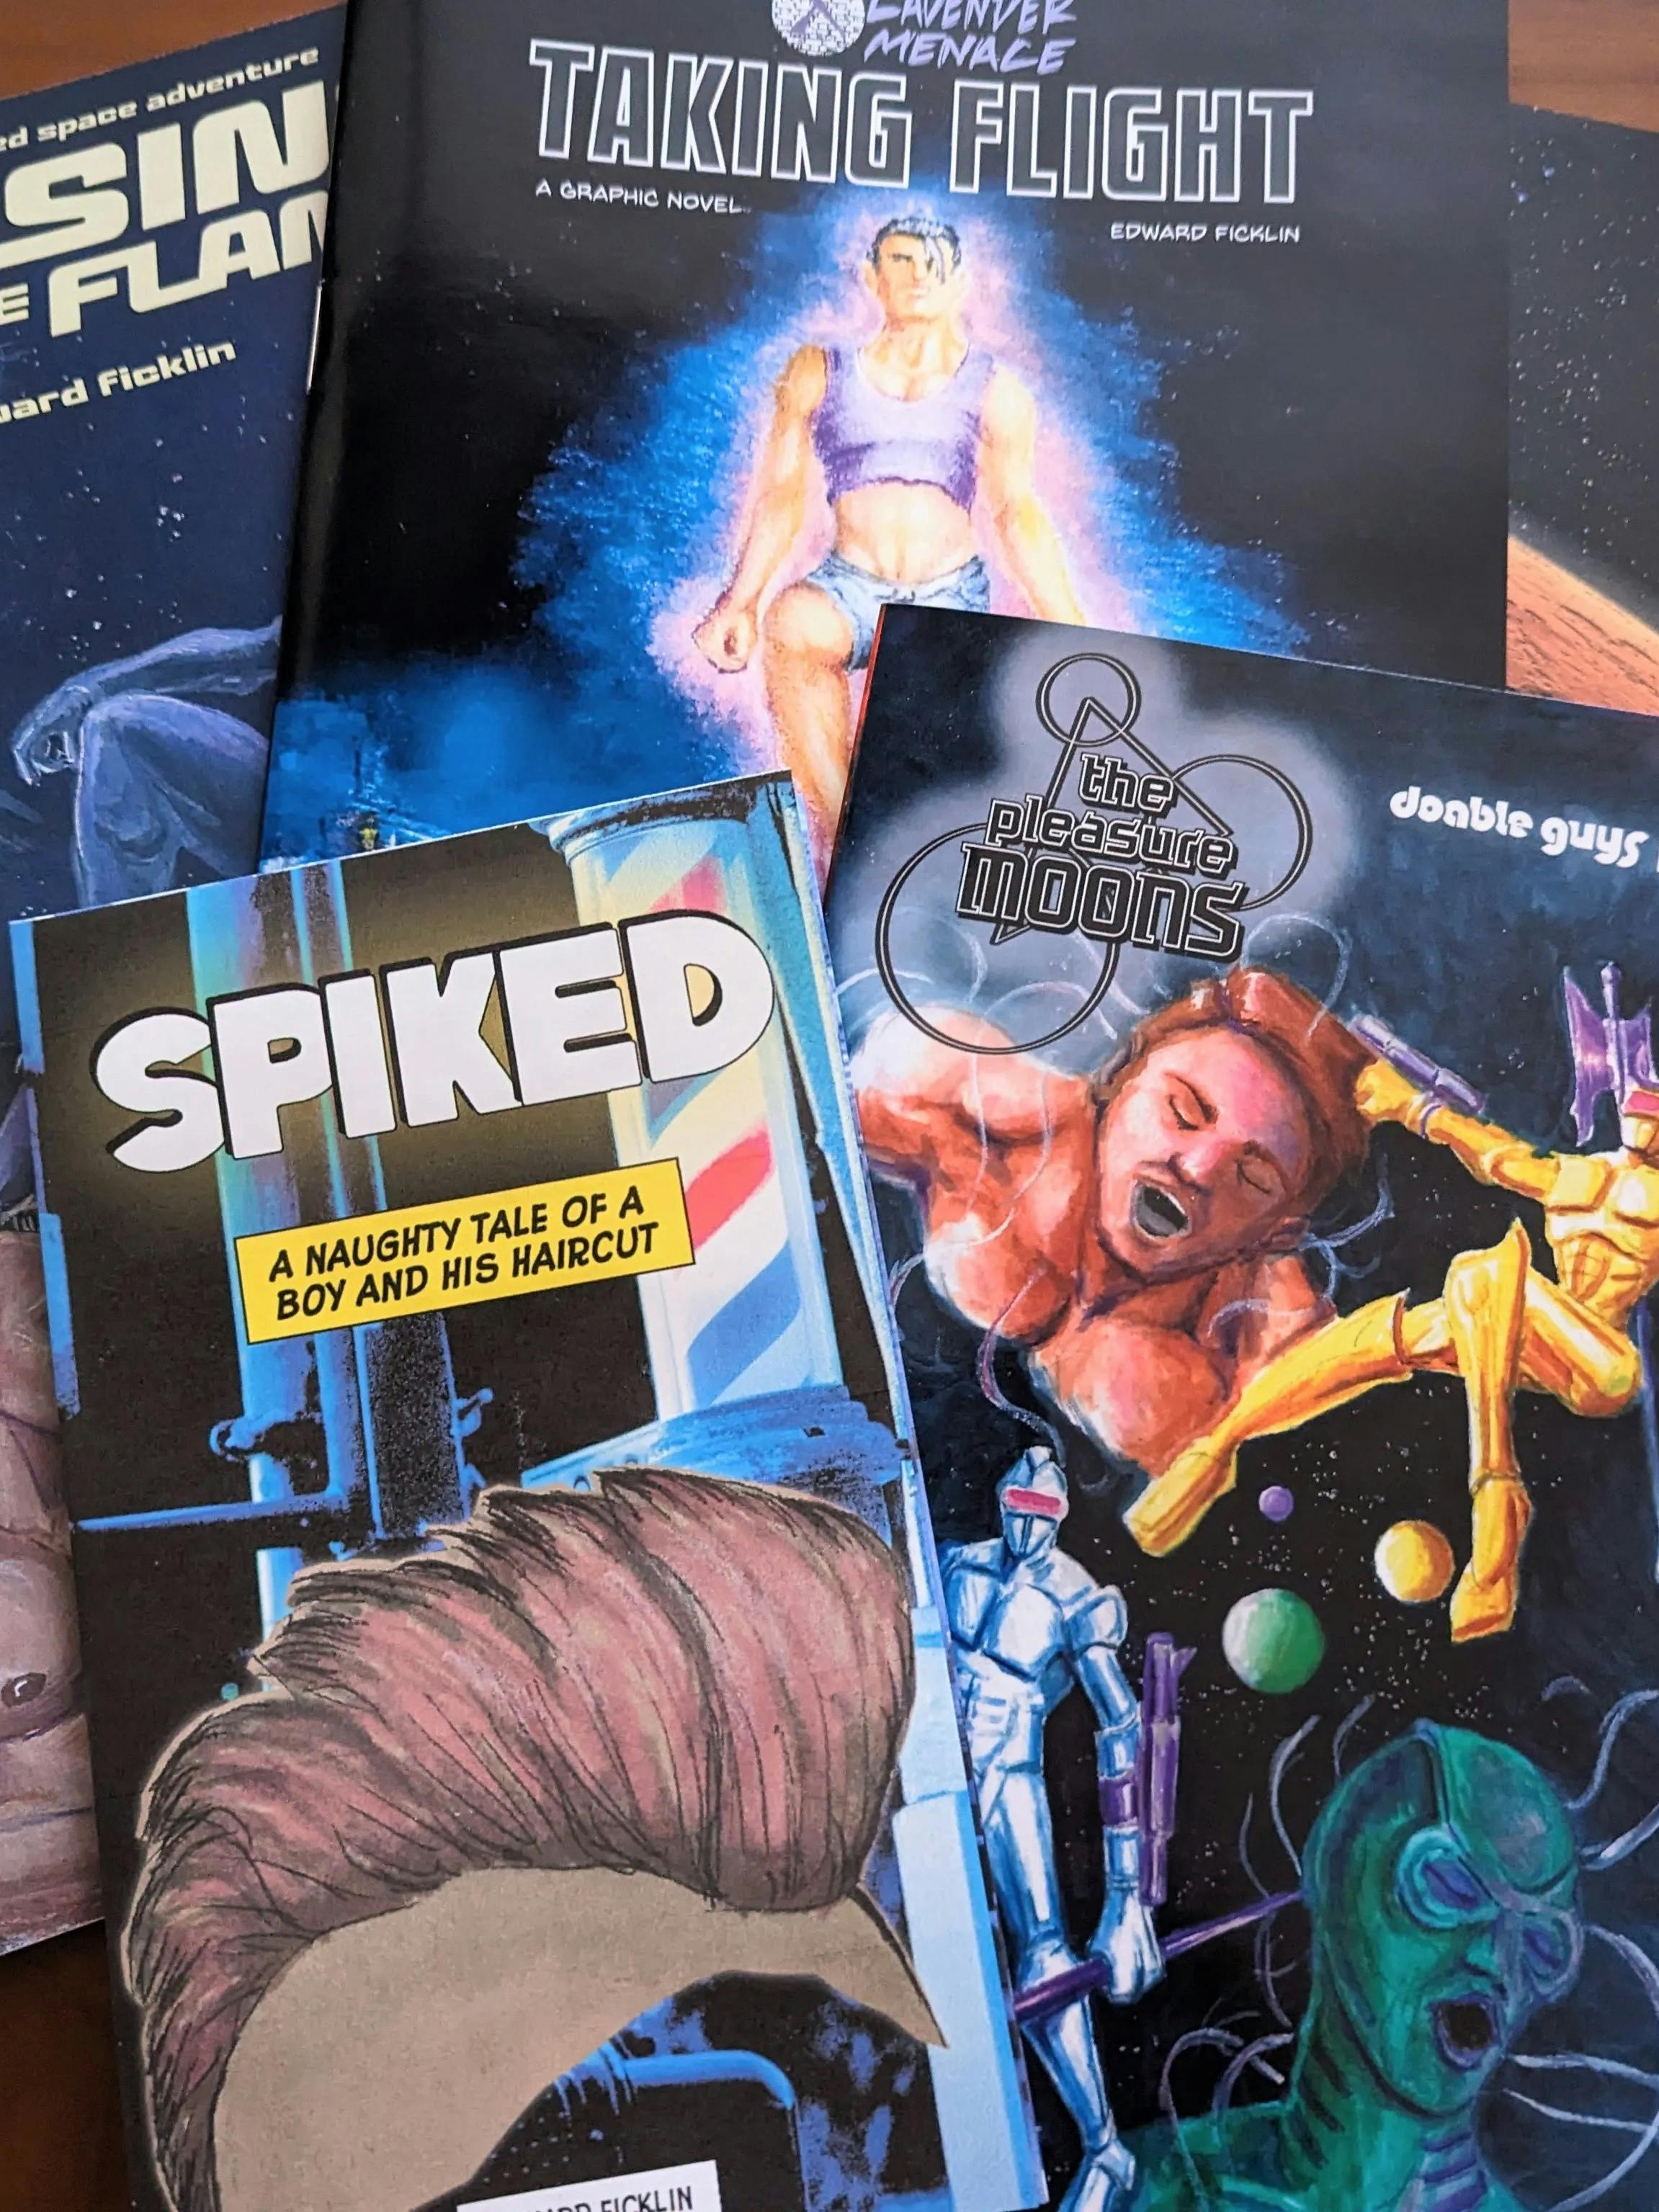 selection of comic books